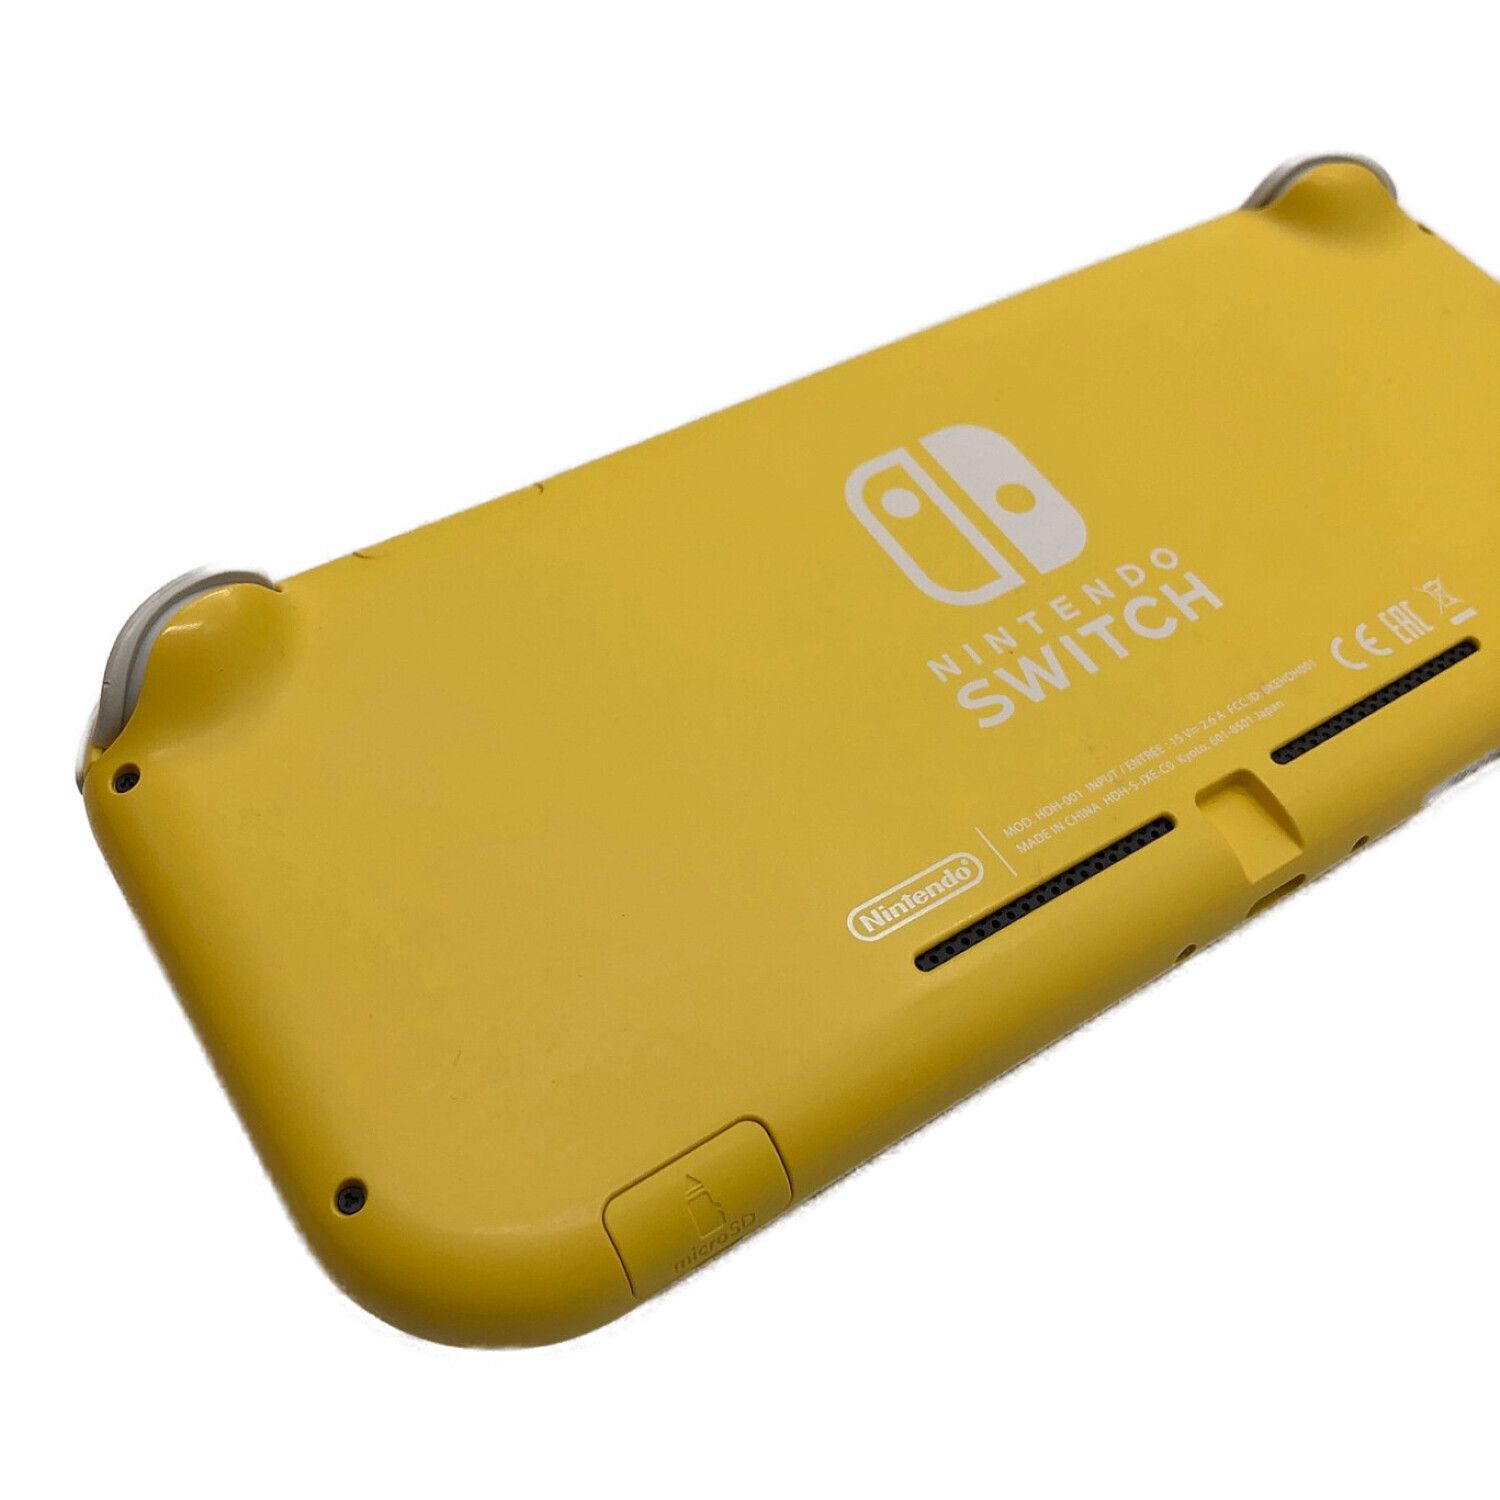 Nintendo (ニンテンドウ) Nintendo Switch Lite イエロー HDH-001